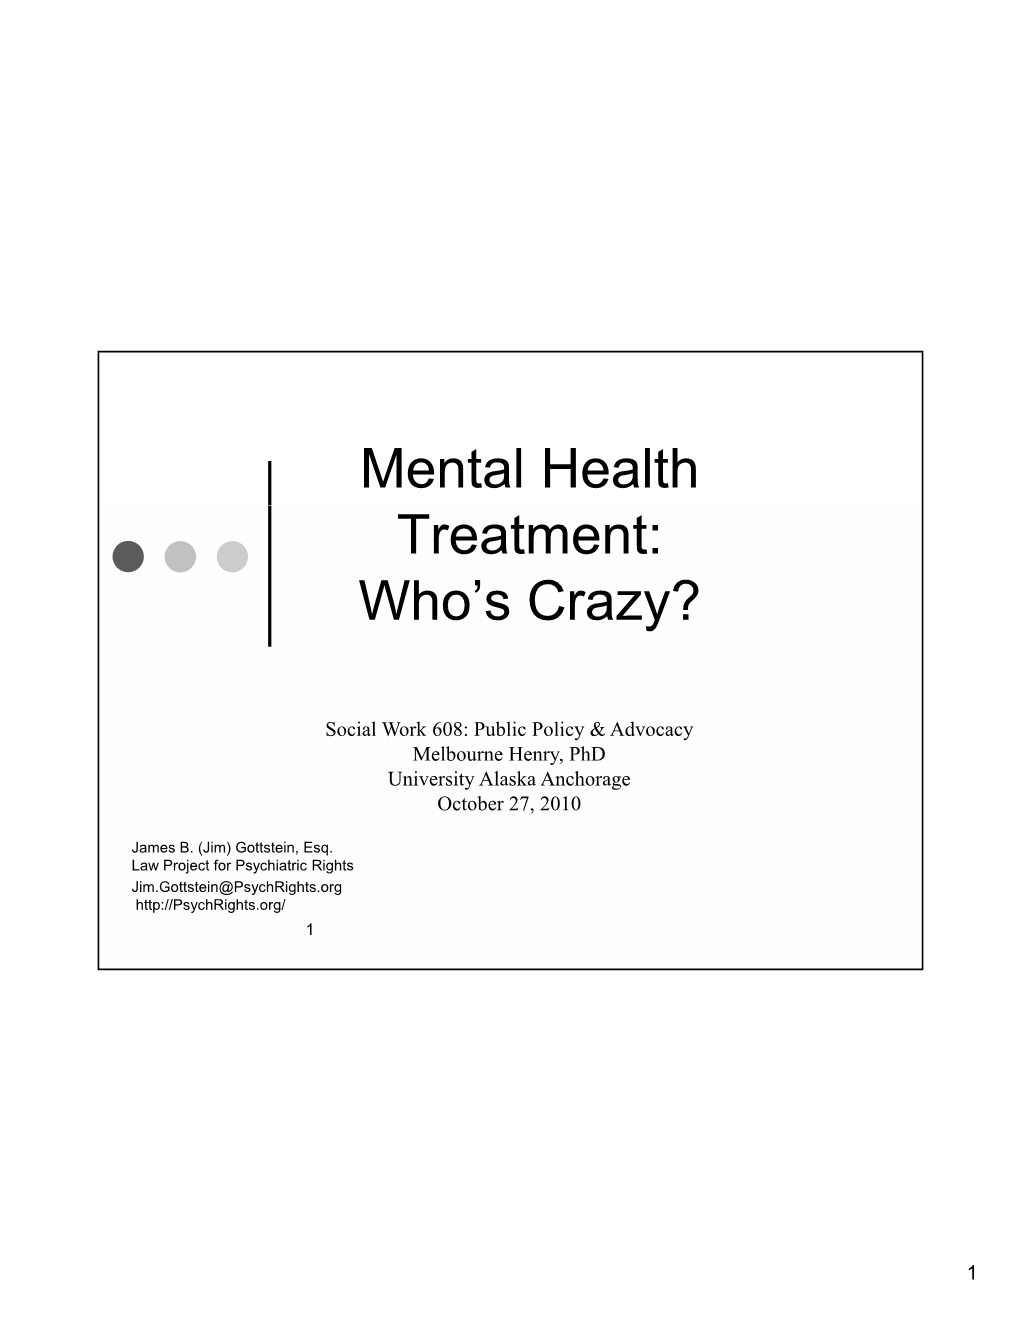 Mental Health Treatment: Who's Crazy?